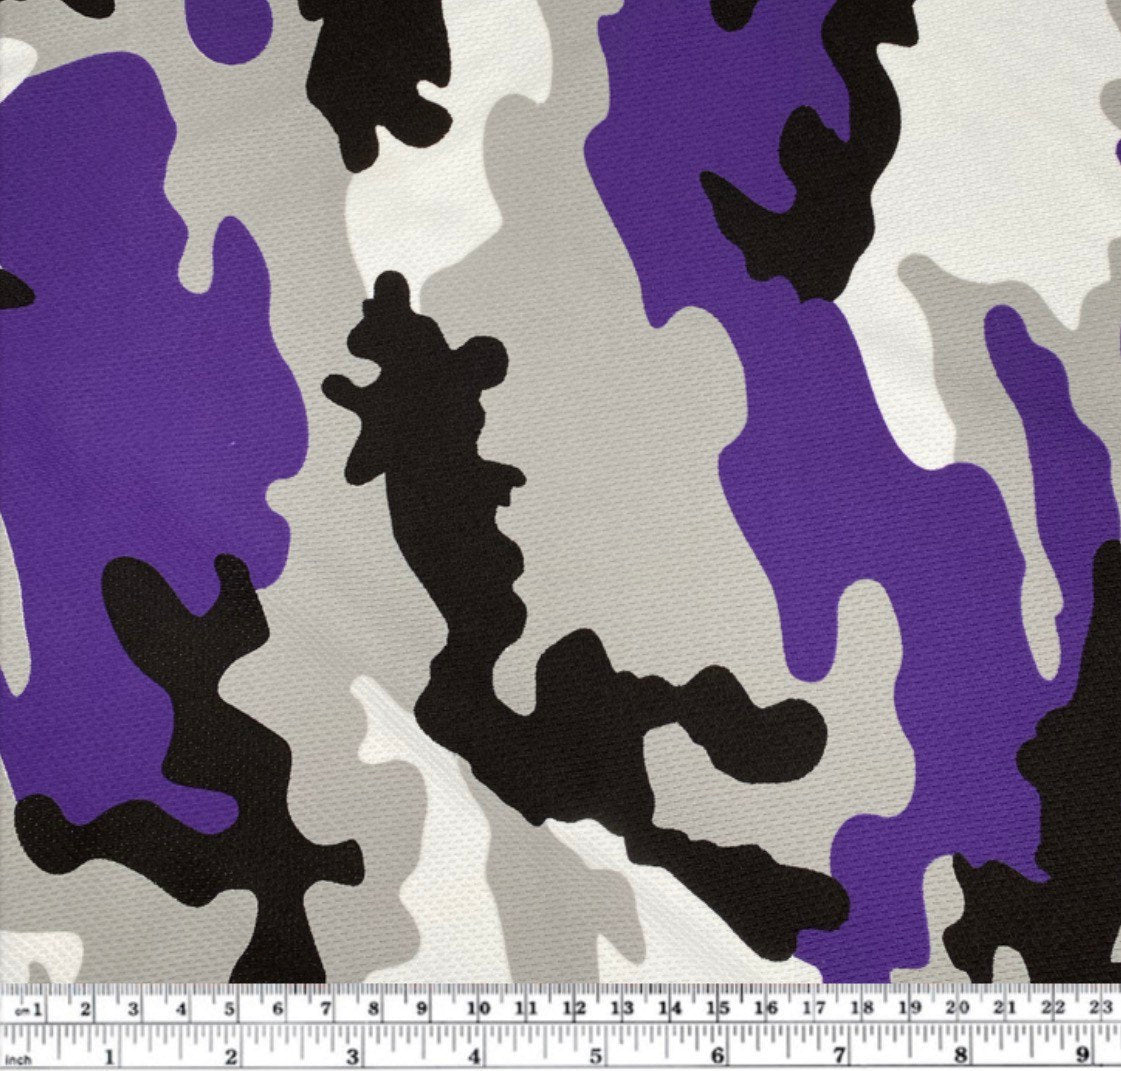 Printed Cool Mesh - Camouflage - Purple/Black/White